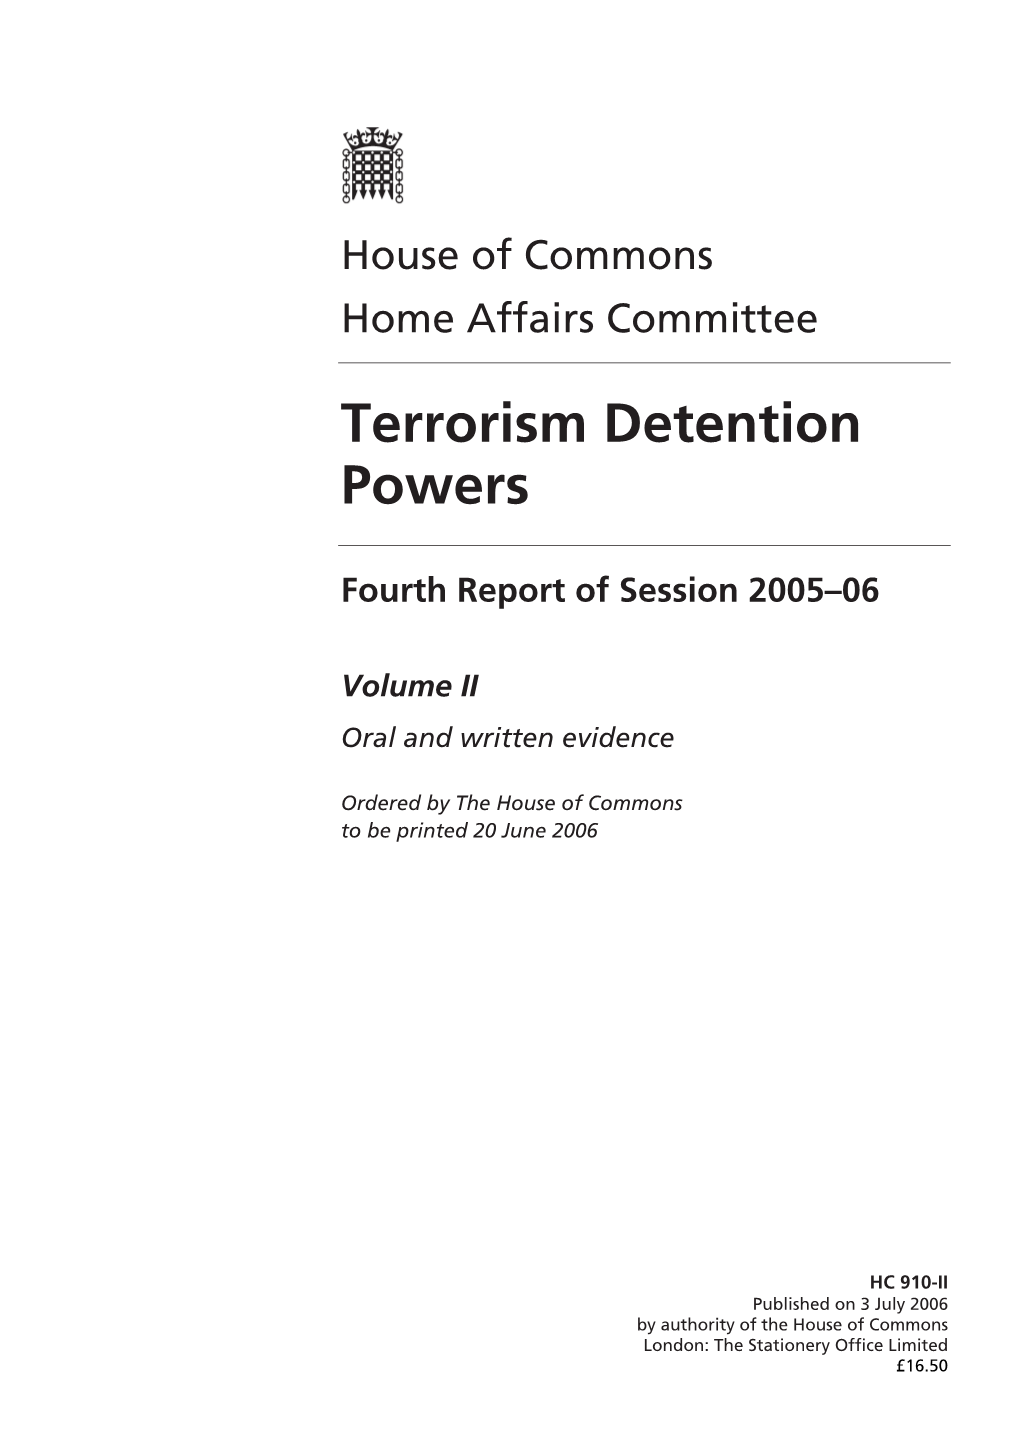 Terrorism Detention Powers